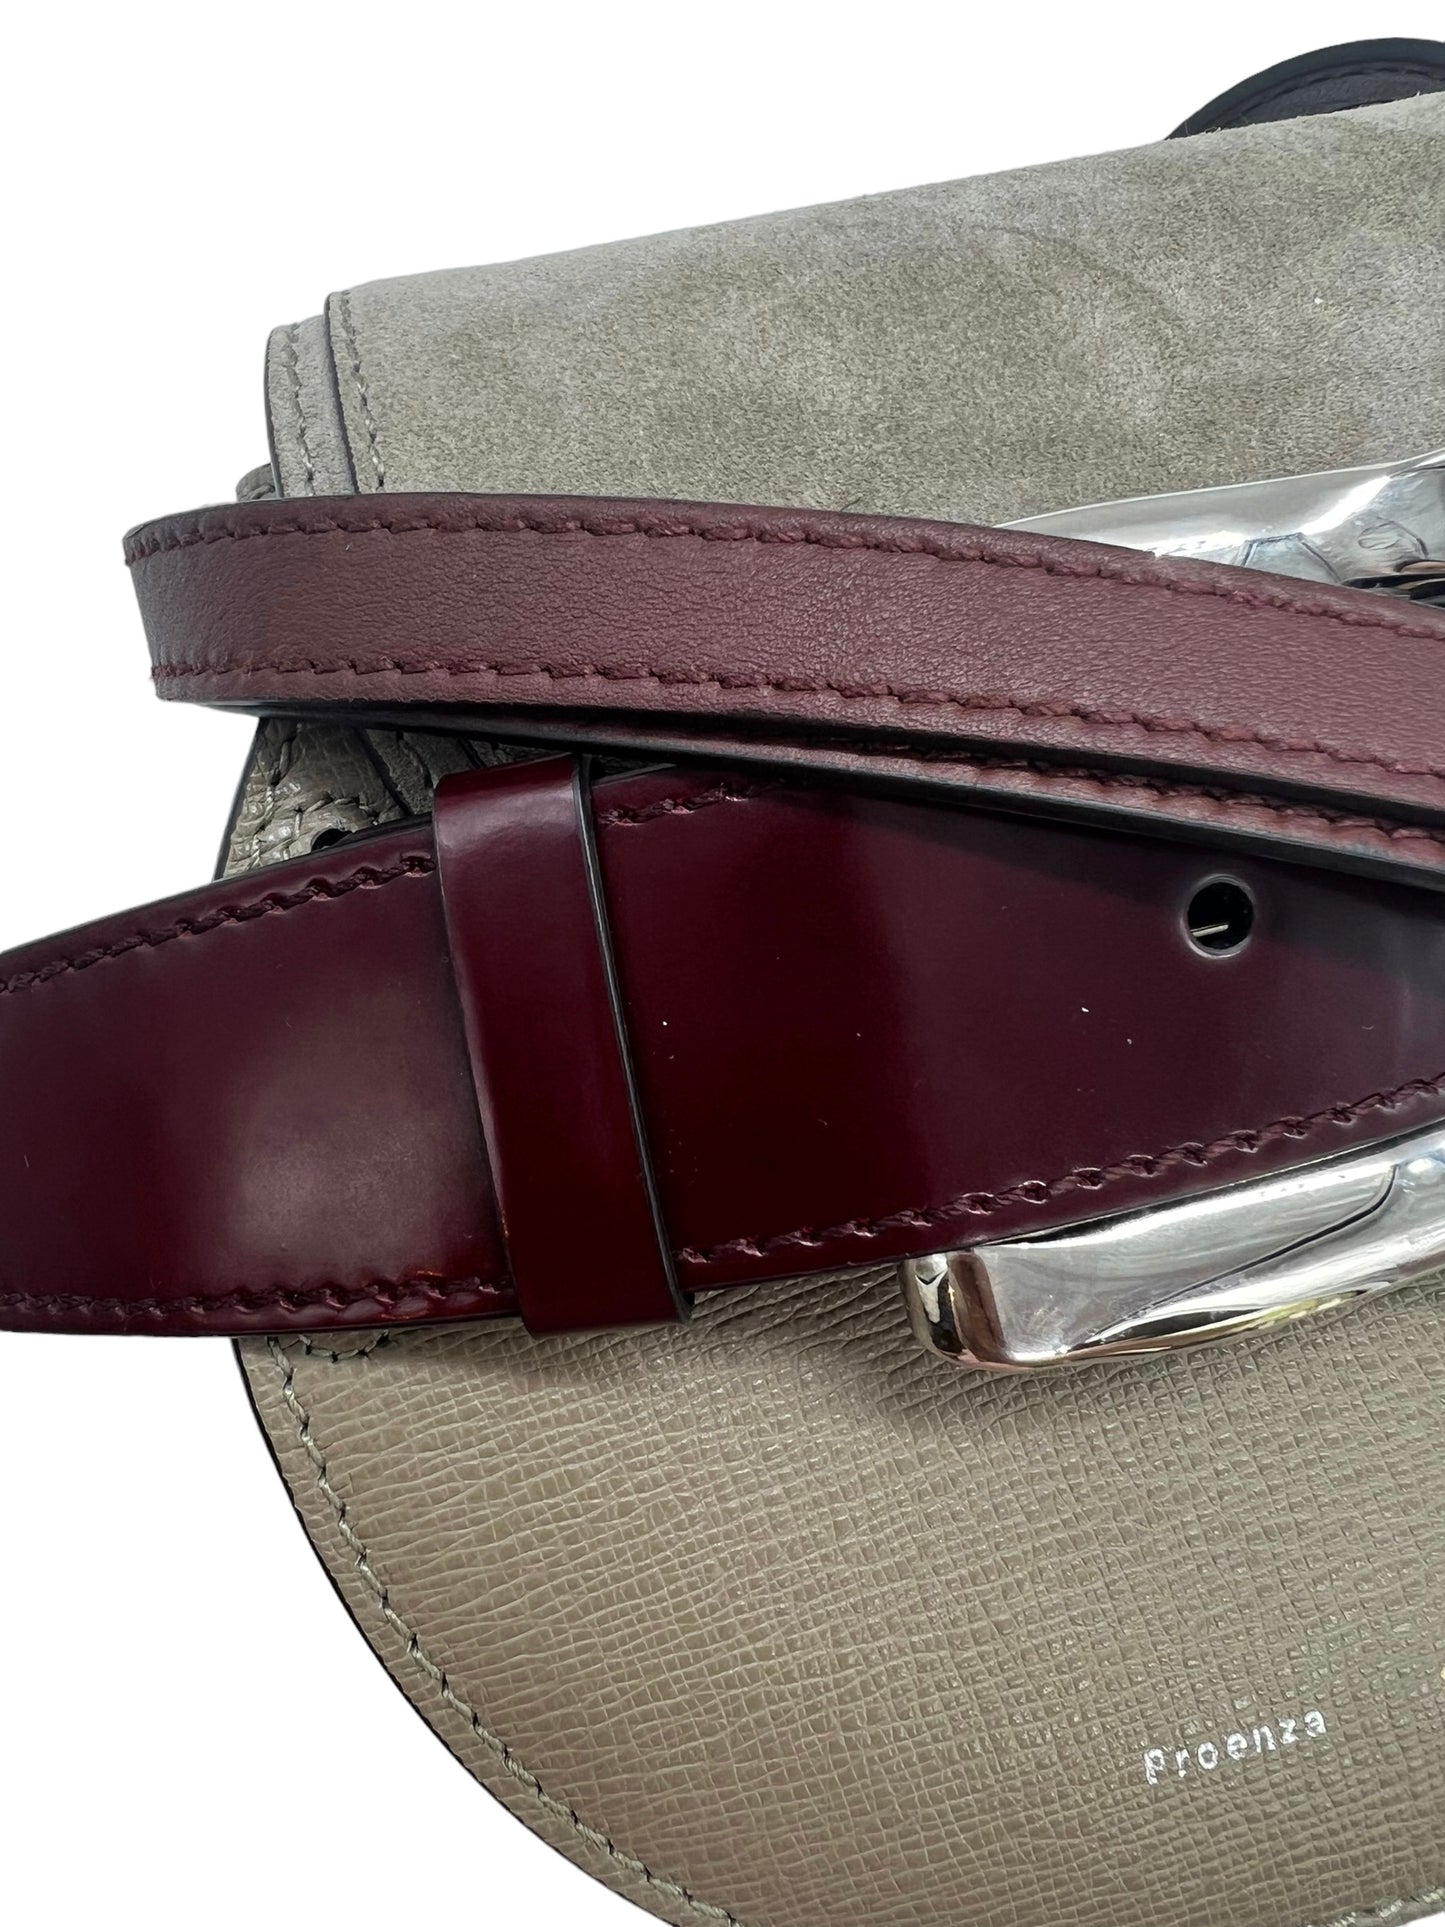 Proenza Schouler Taupe Leather Buckle Mini Crossbody Bag